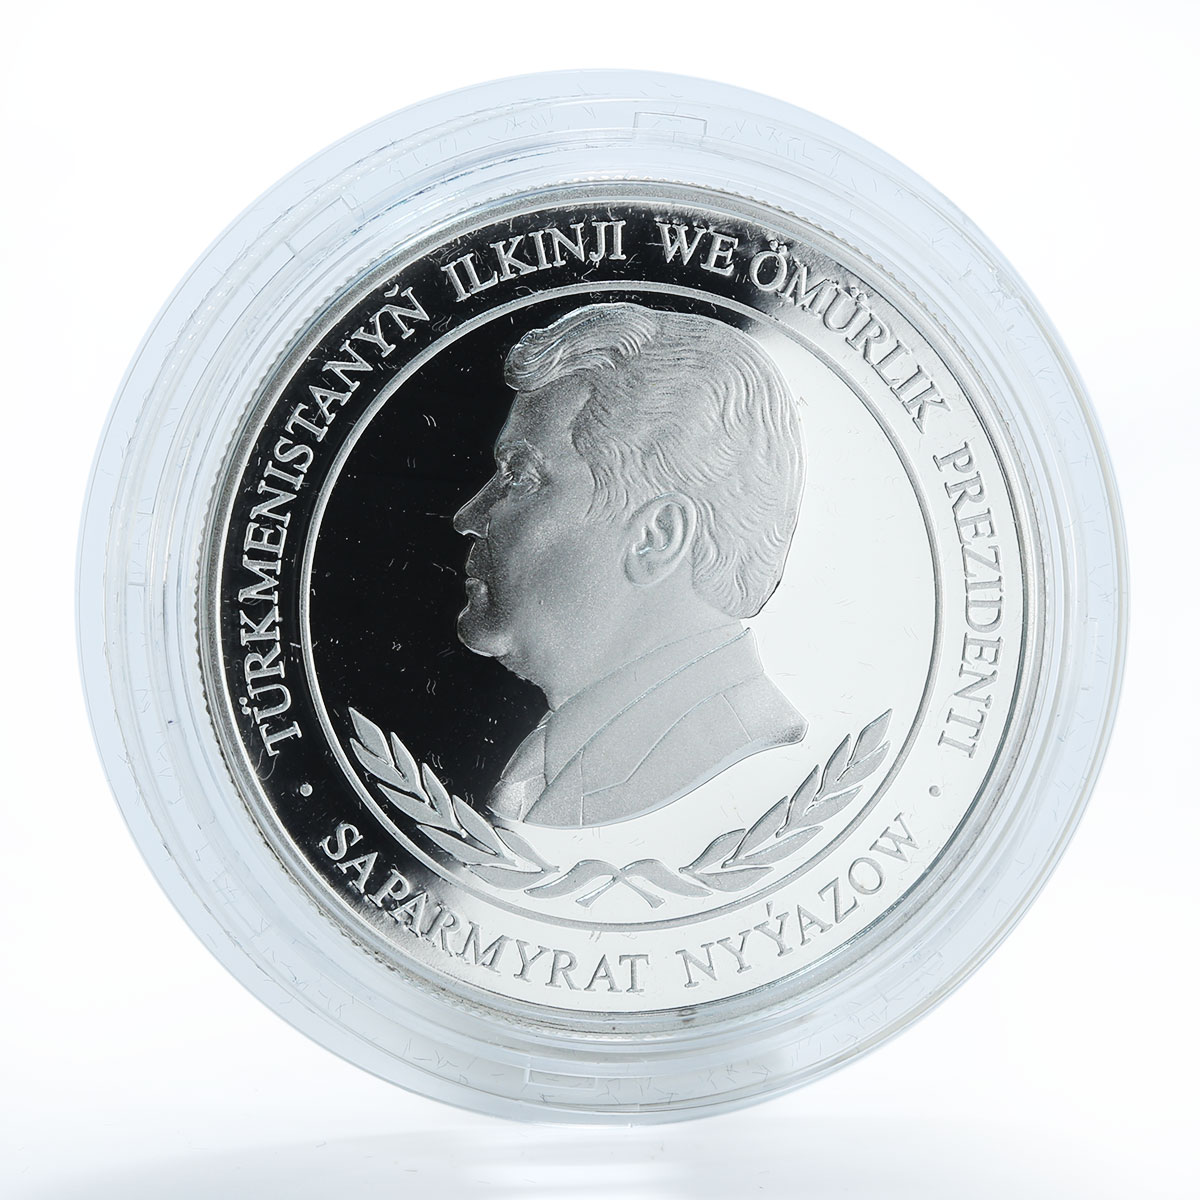 Turkmenistan 500 manat Uzun Hasan Beg Turkmen Sultan silver coin 2001